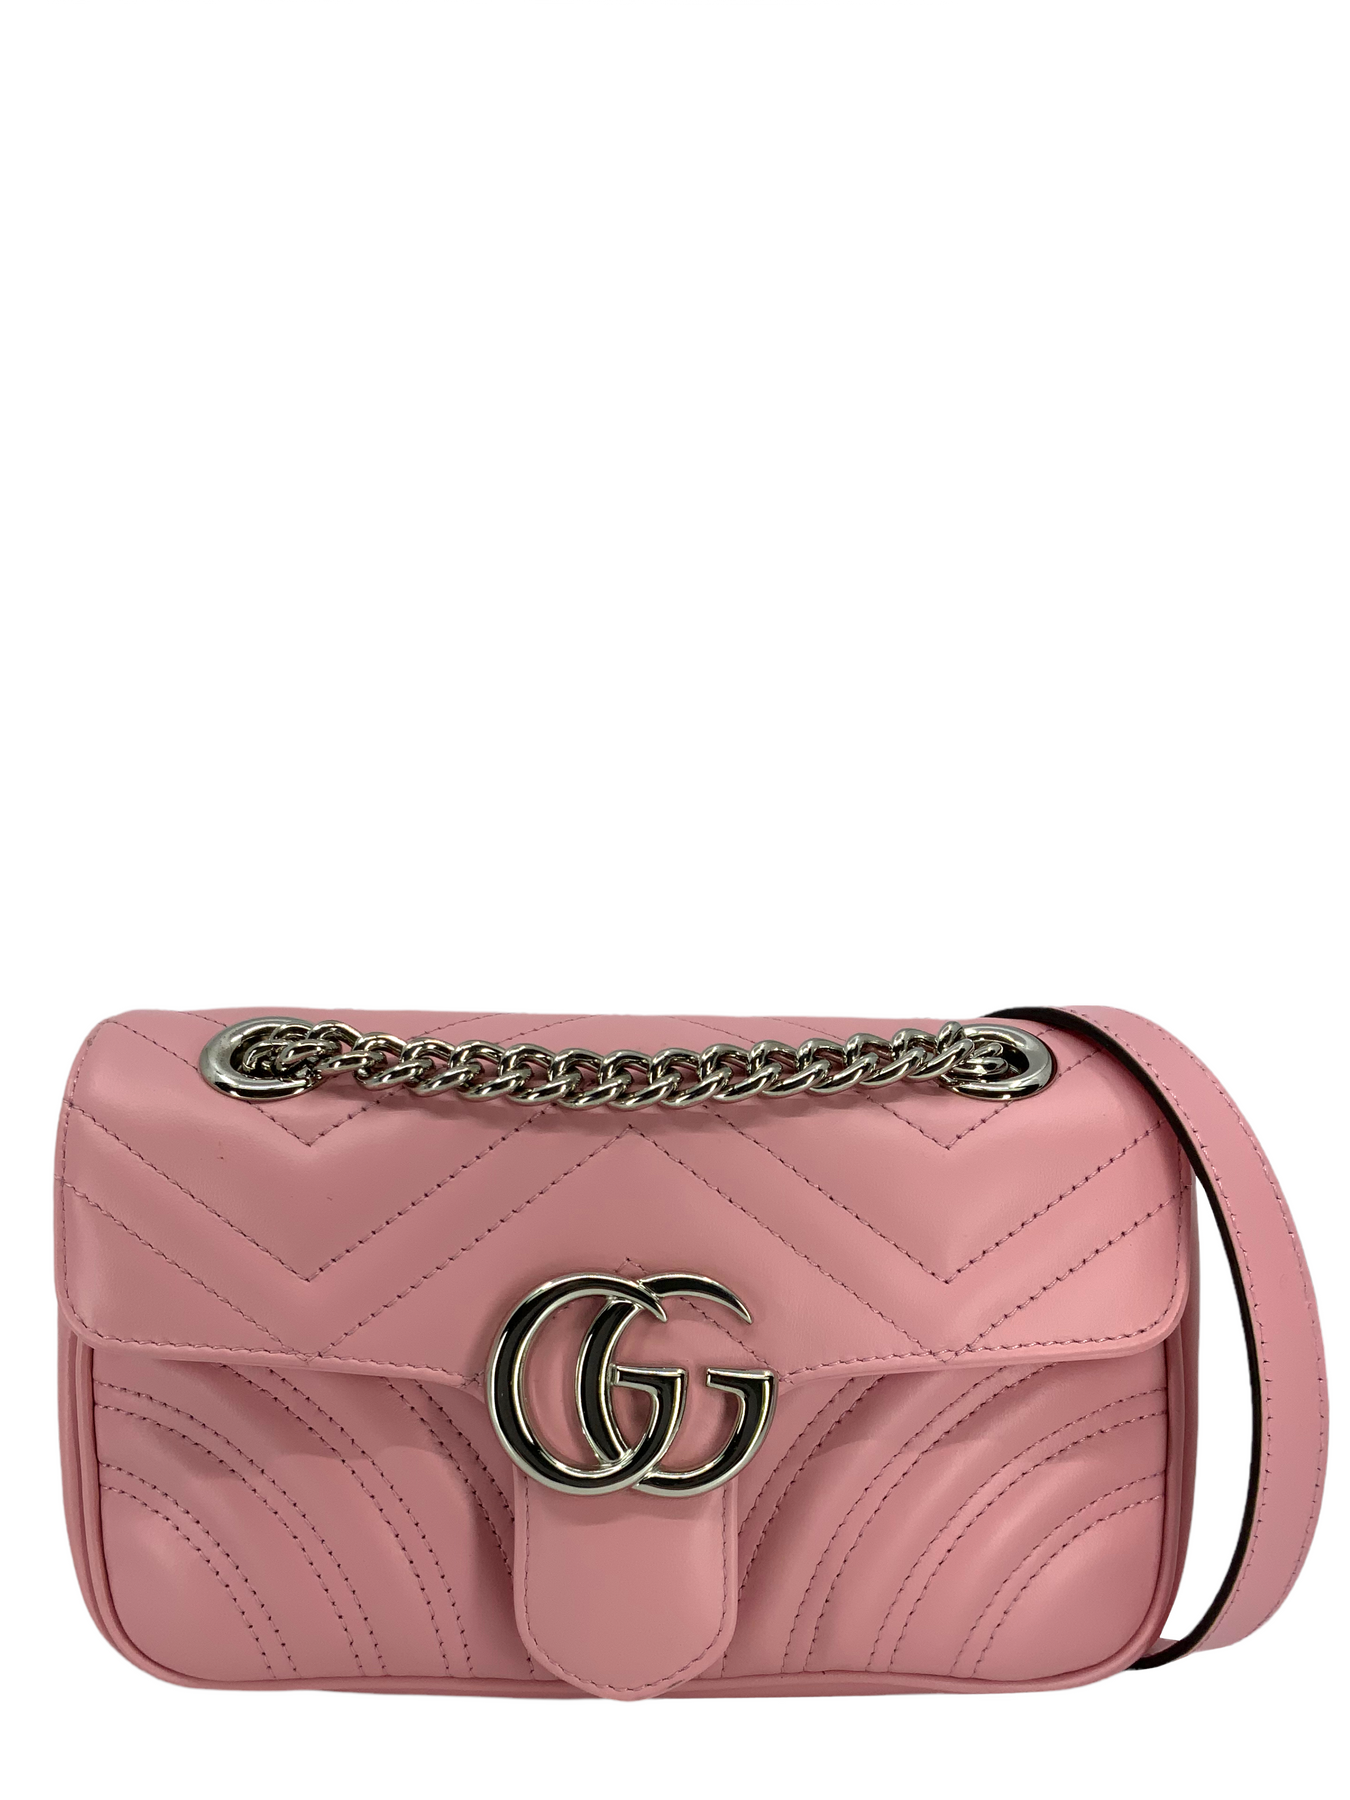 Gucci Marmont Top Handle Bag GG Mini Pastel Pink in Matelasse